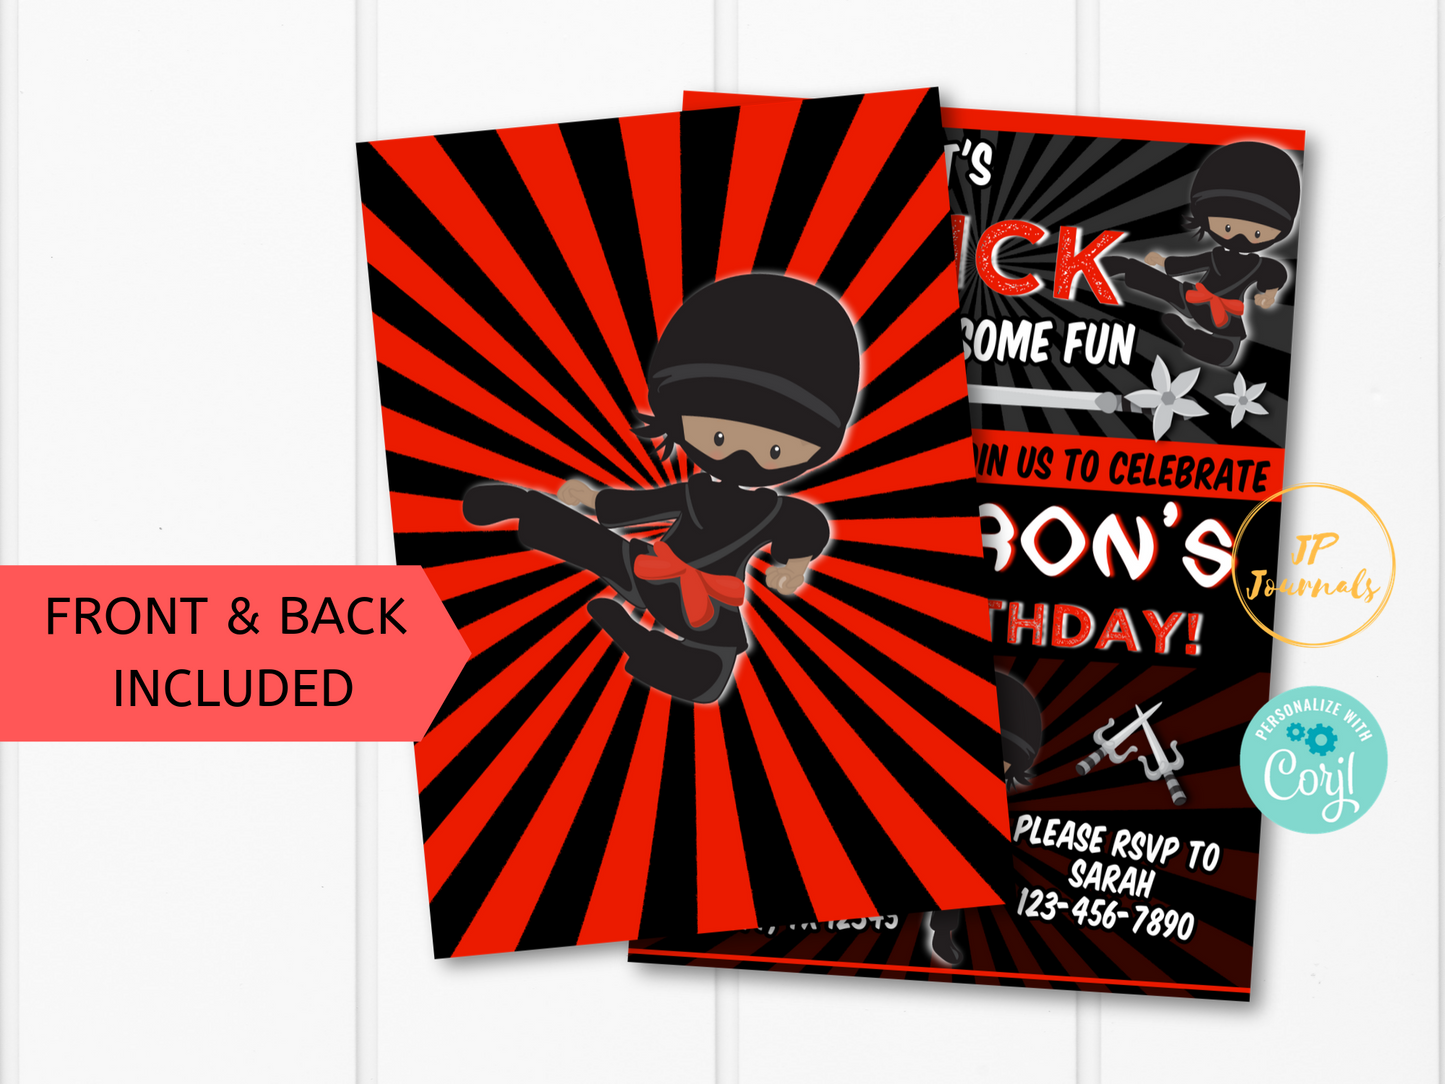 Boy Ninja Birthday Party Invitation Template - Edit Online Print at Home